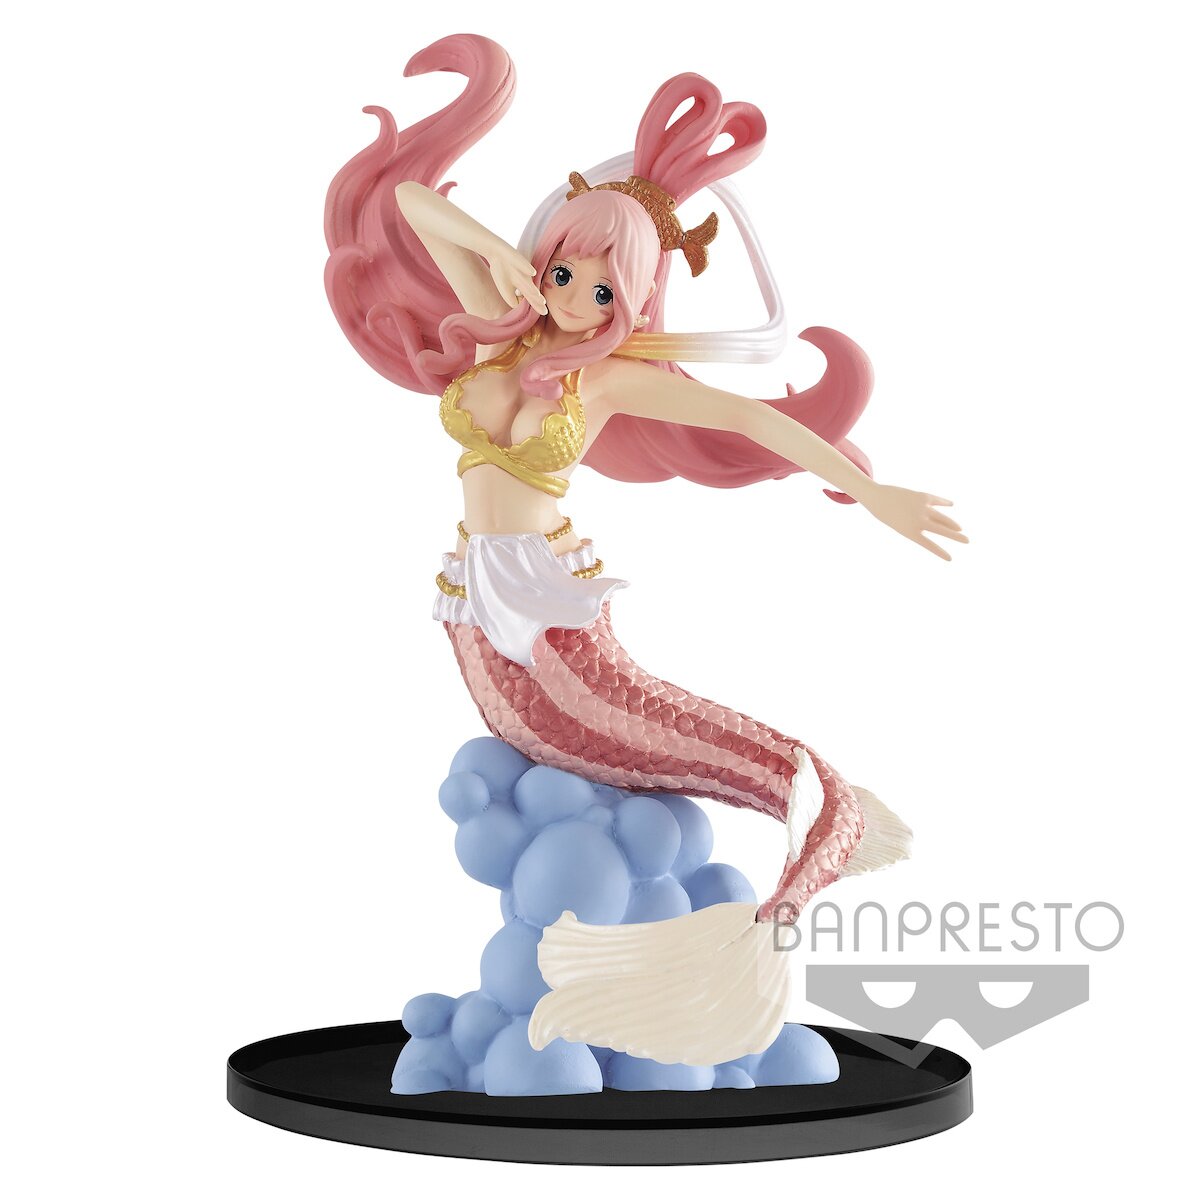 One Piece Banpresto World Figure Colosseum Vol. 5: Princess Shirahoshi